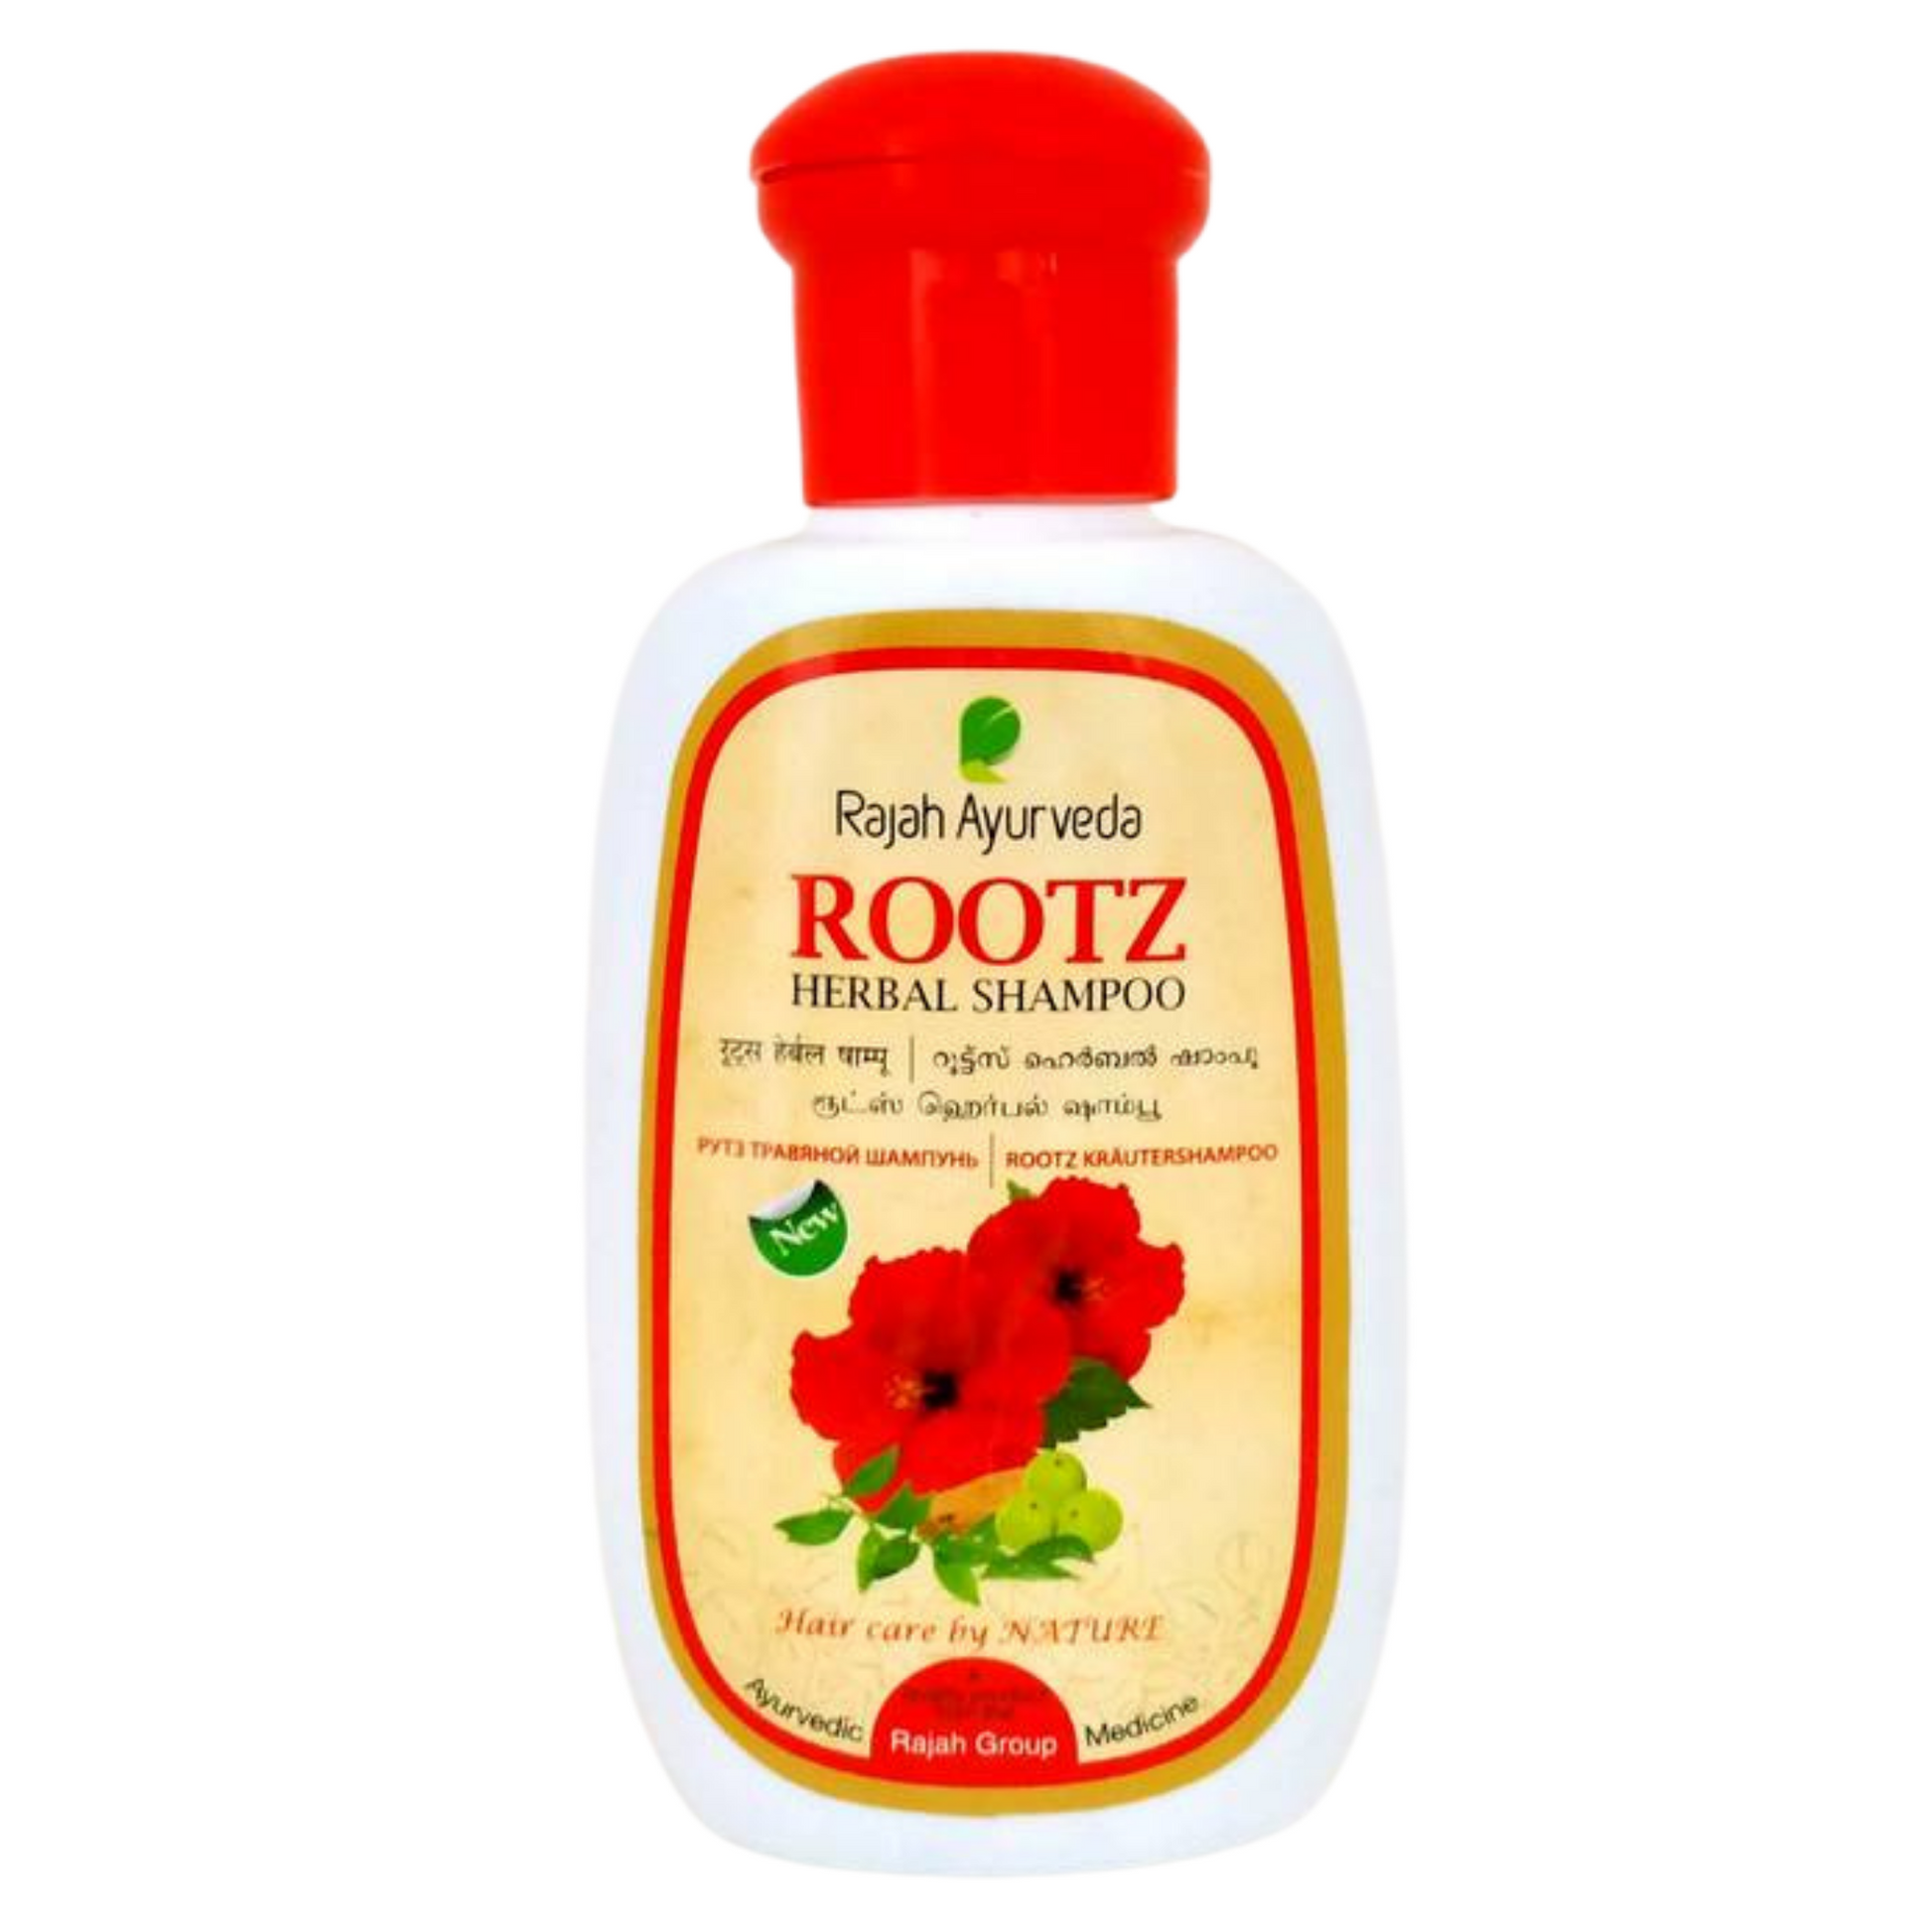 Shop Rootz Herbal Shampoo 100ml at price 100.00 from Rajah ayurveda Online - Ayush Care